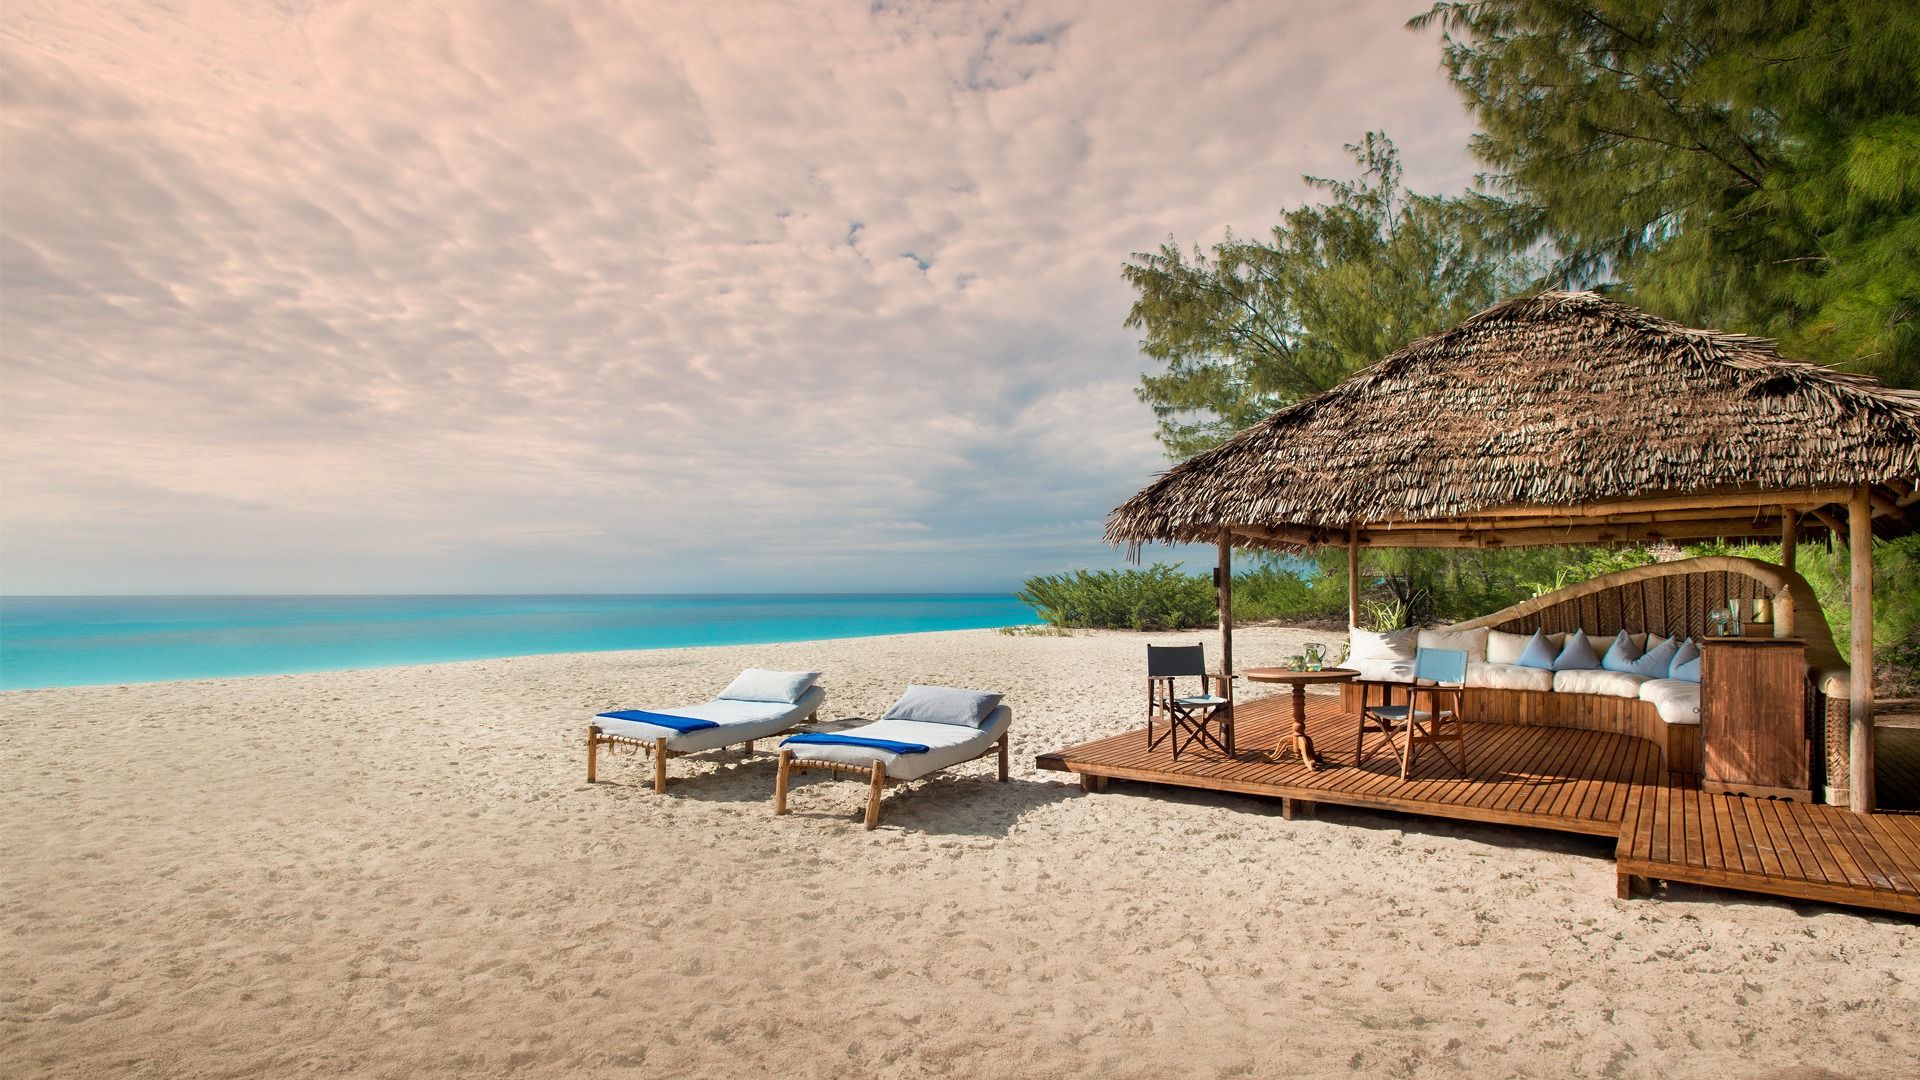 andBeyond Mnemba Island. Luxury Private Island in Zanzibar